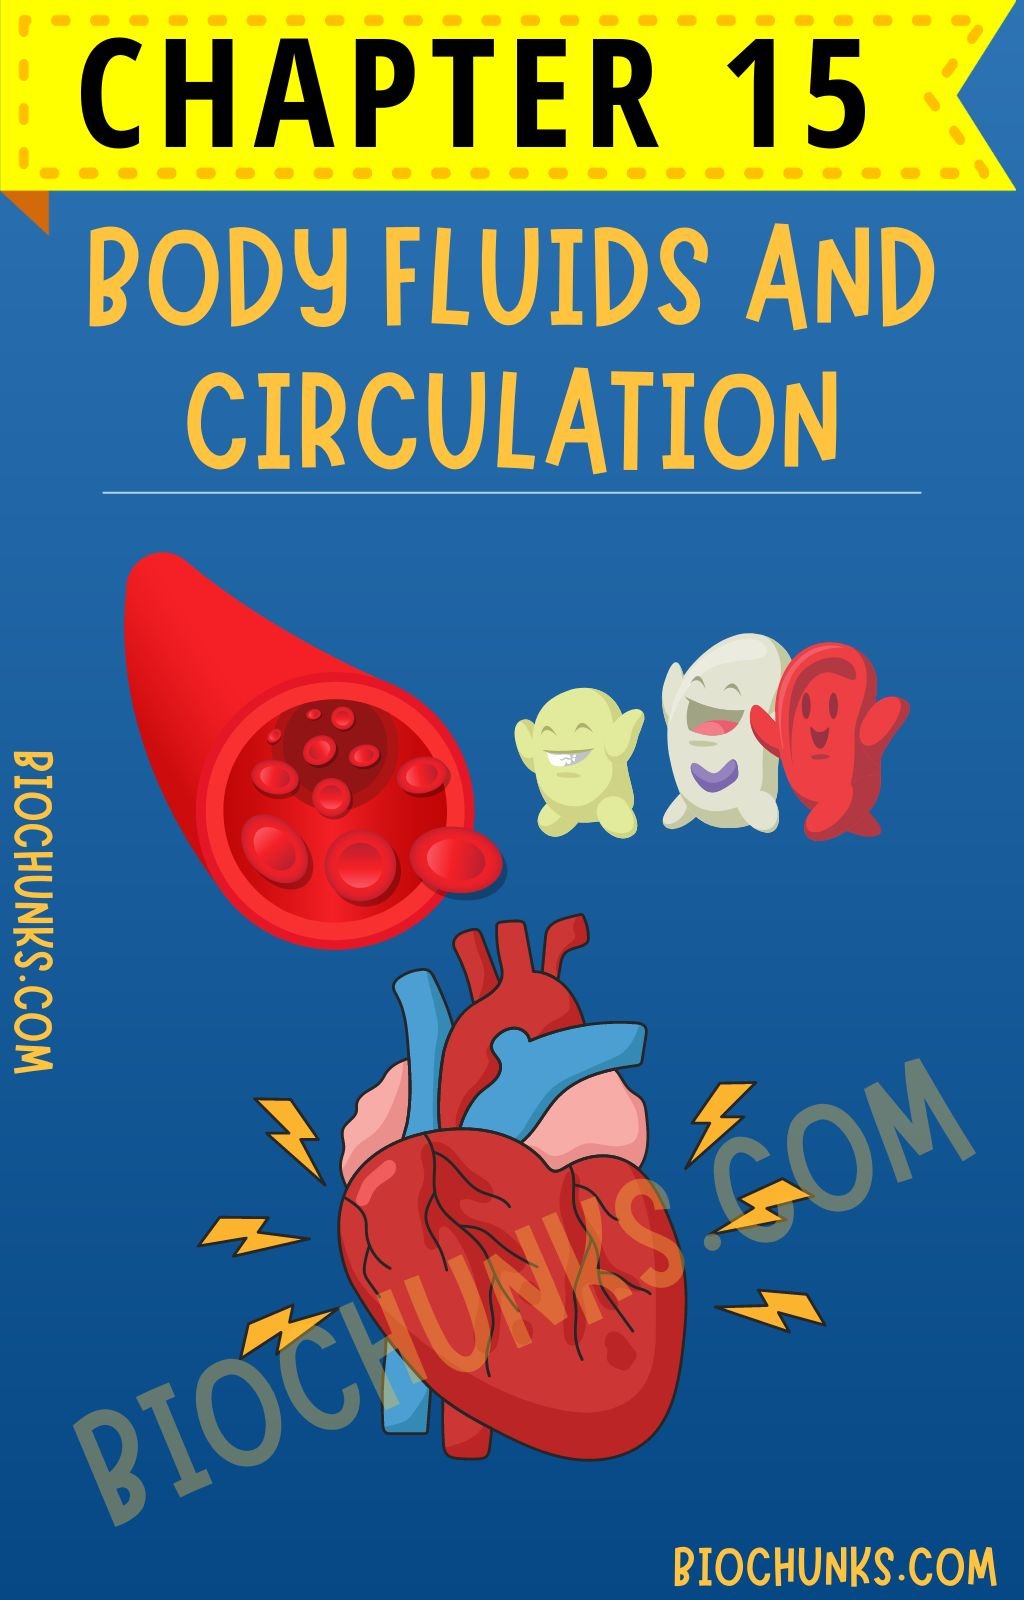 Body Fluids and Circulation Chapter 15 Class 11th biochunks.com